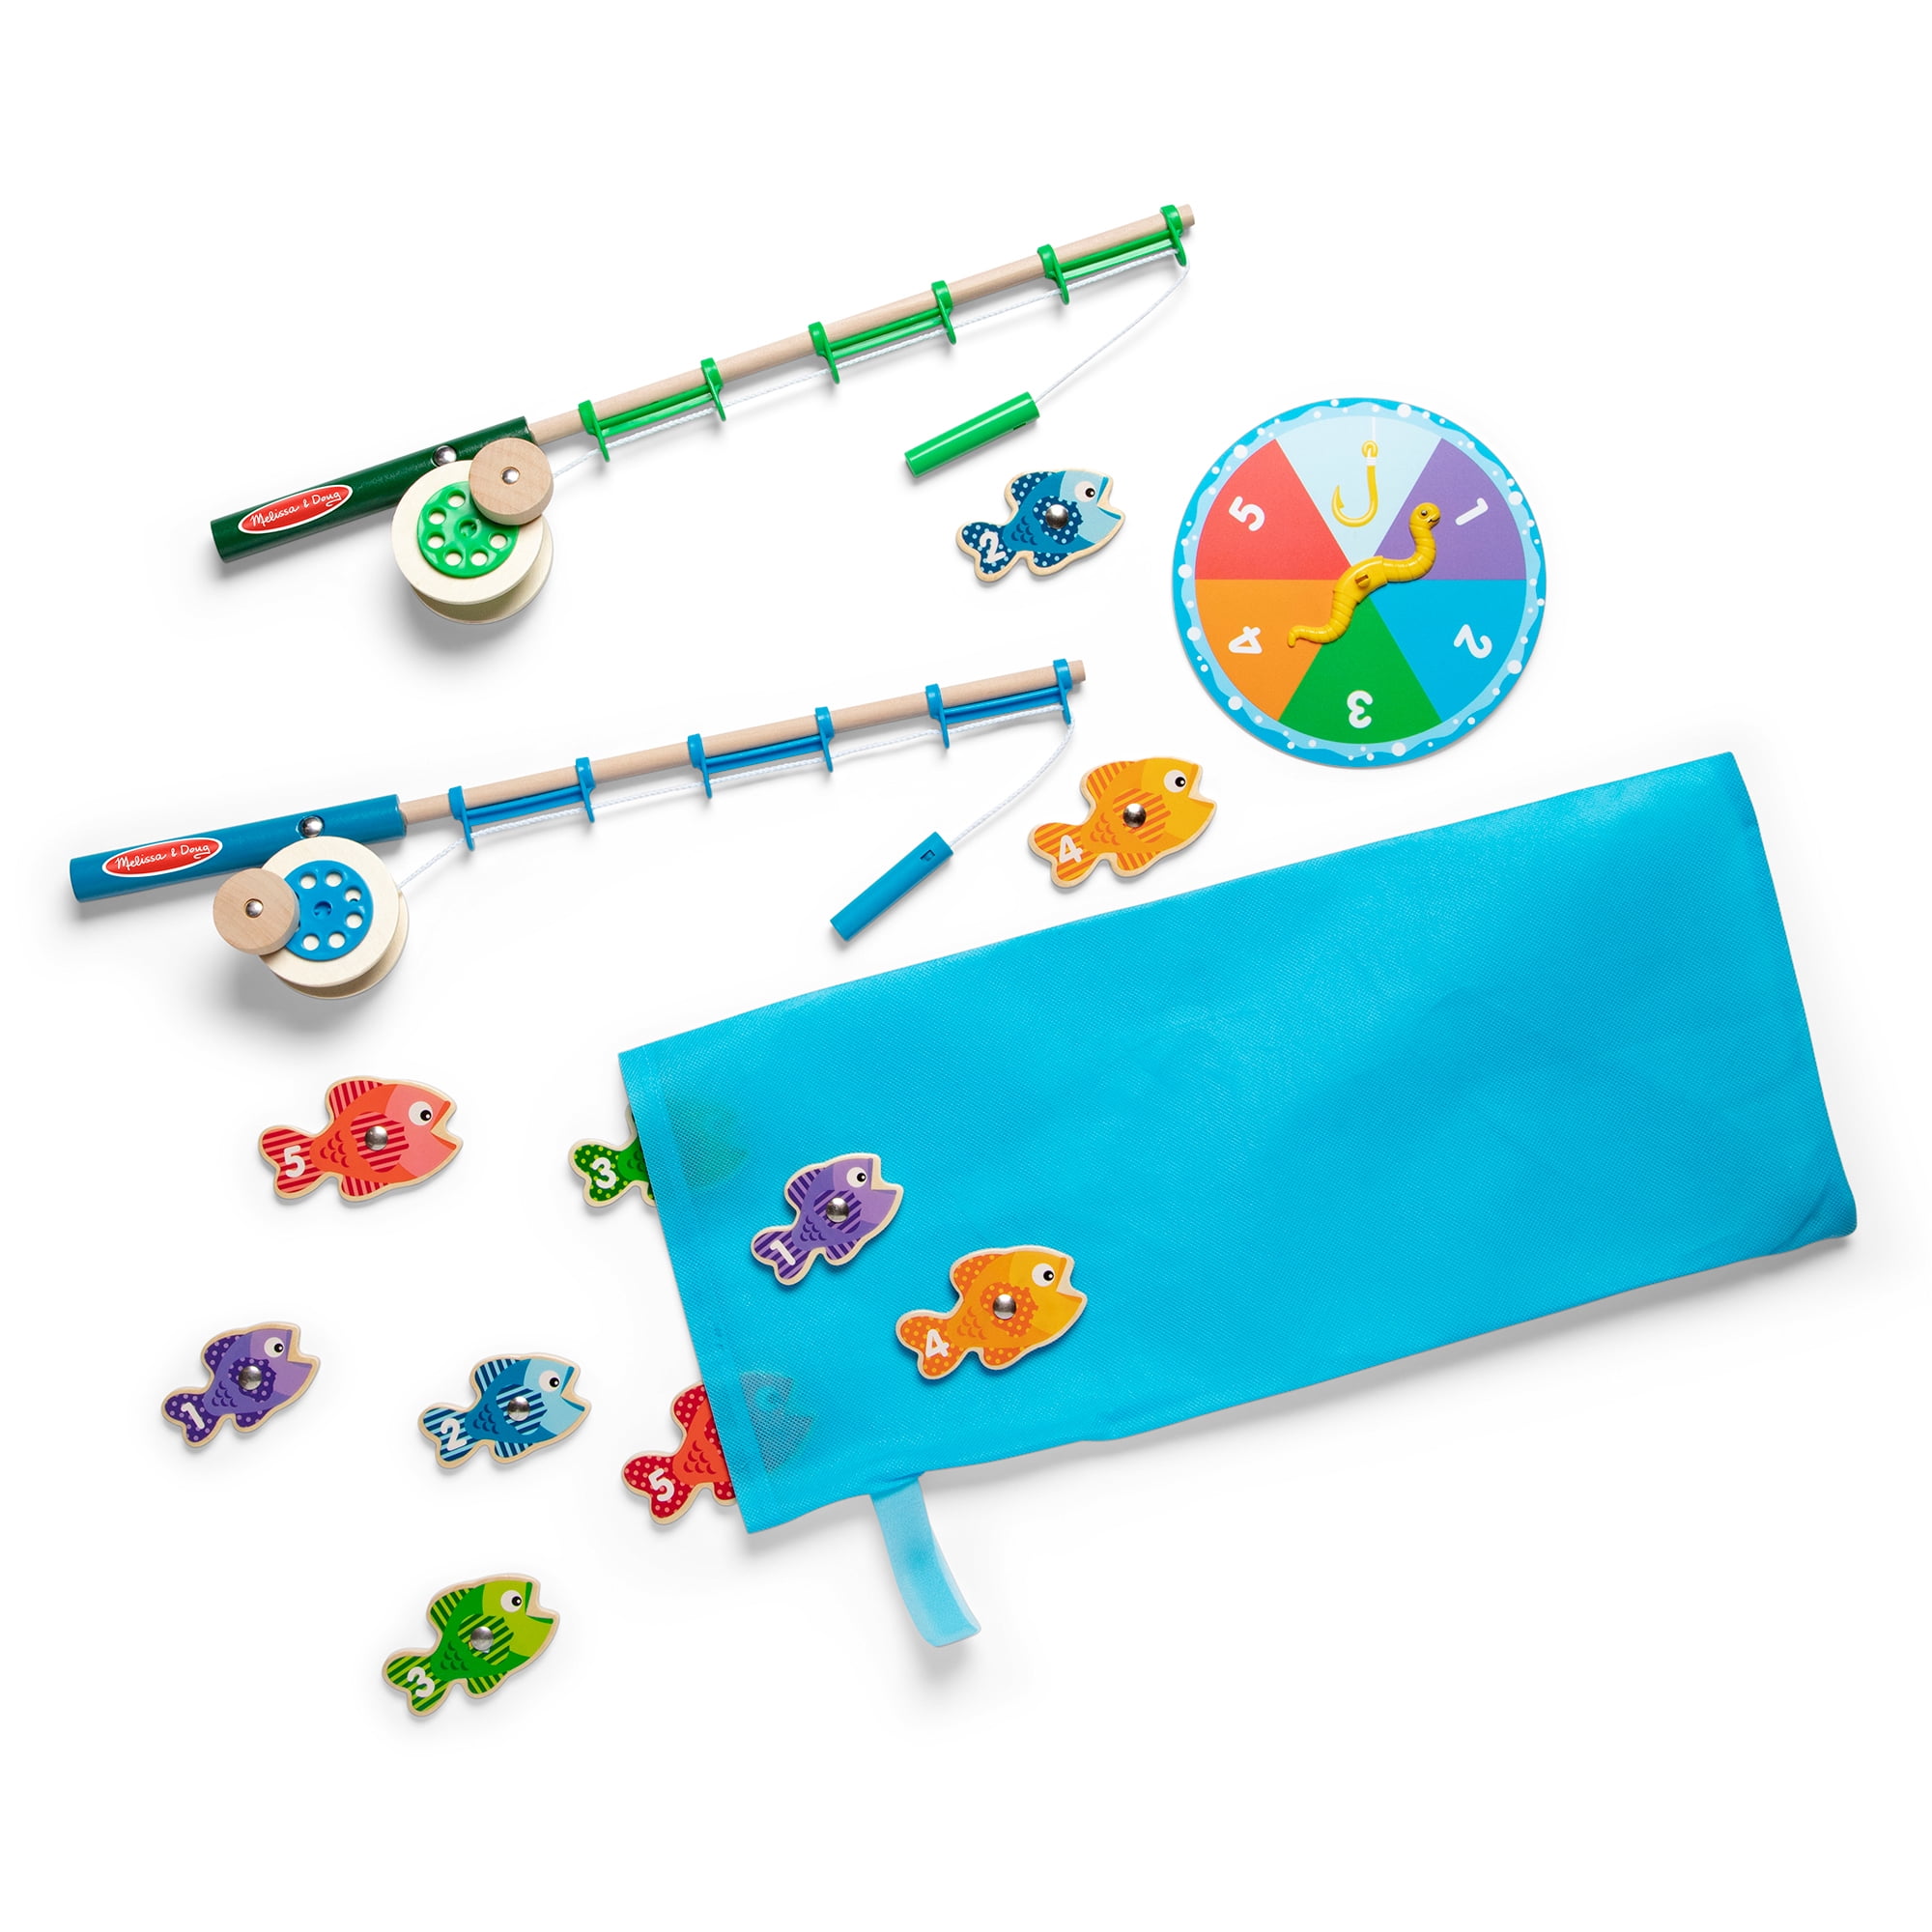 Melissa & Doug Sea Life Scissor Skills Activity Pad with Child-Safe  Scissors – 20 Pages